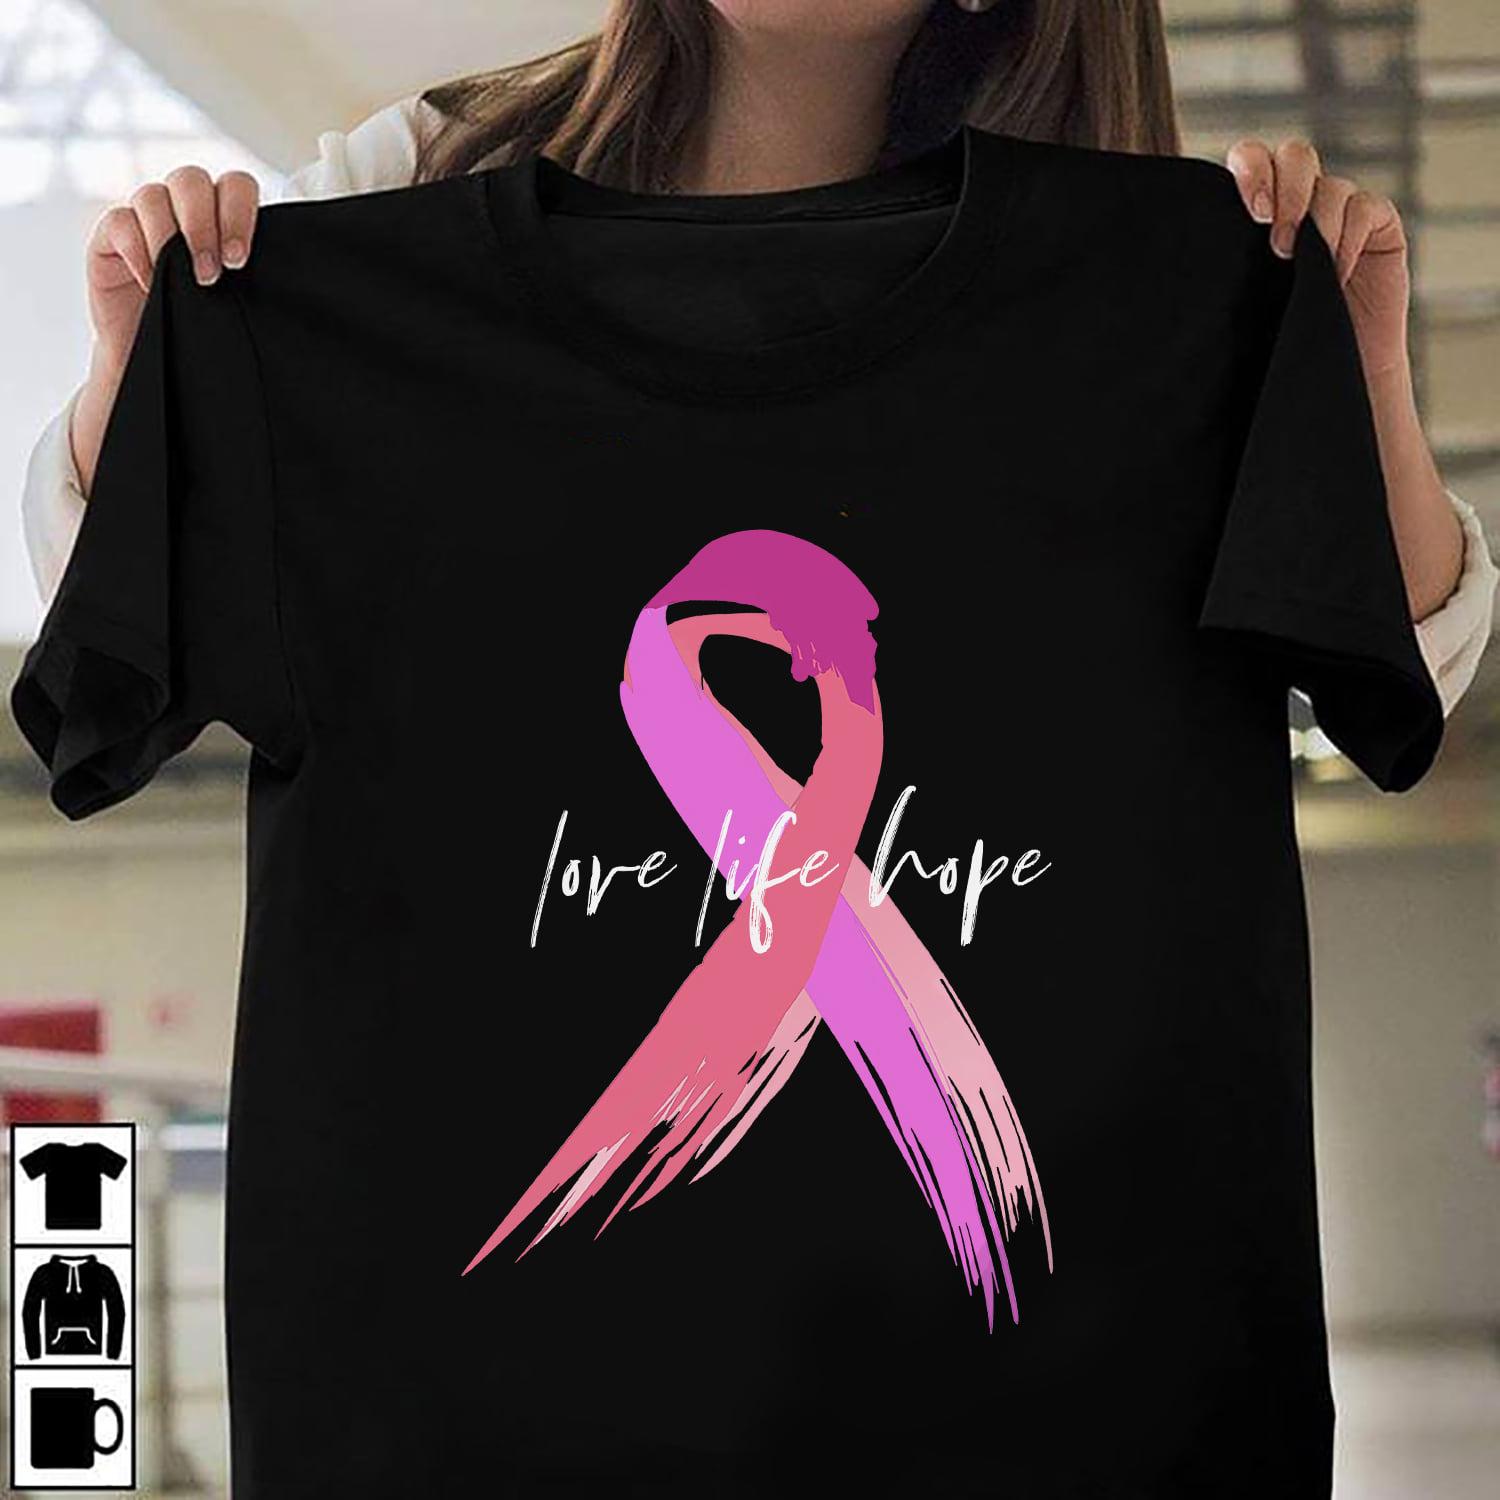 Love life hope - Breast cancer awarness, pink ribbon cancer awareness